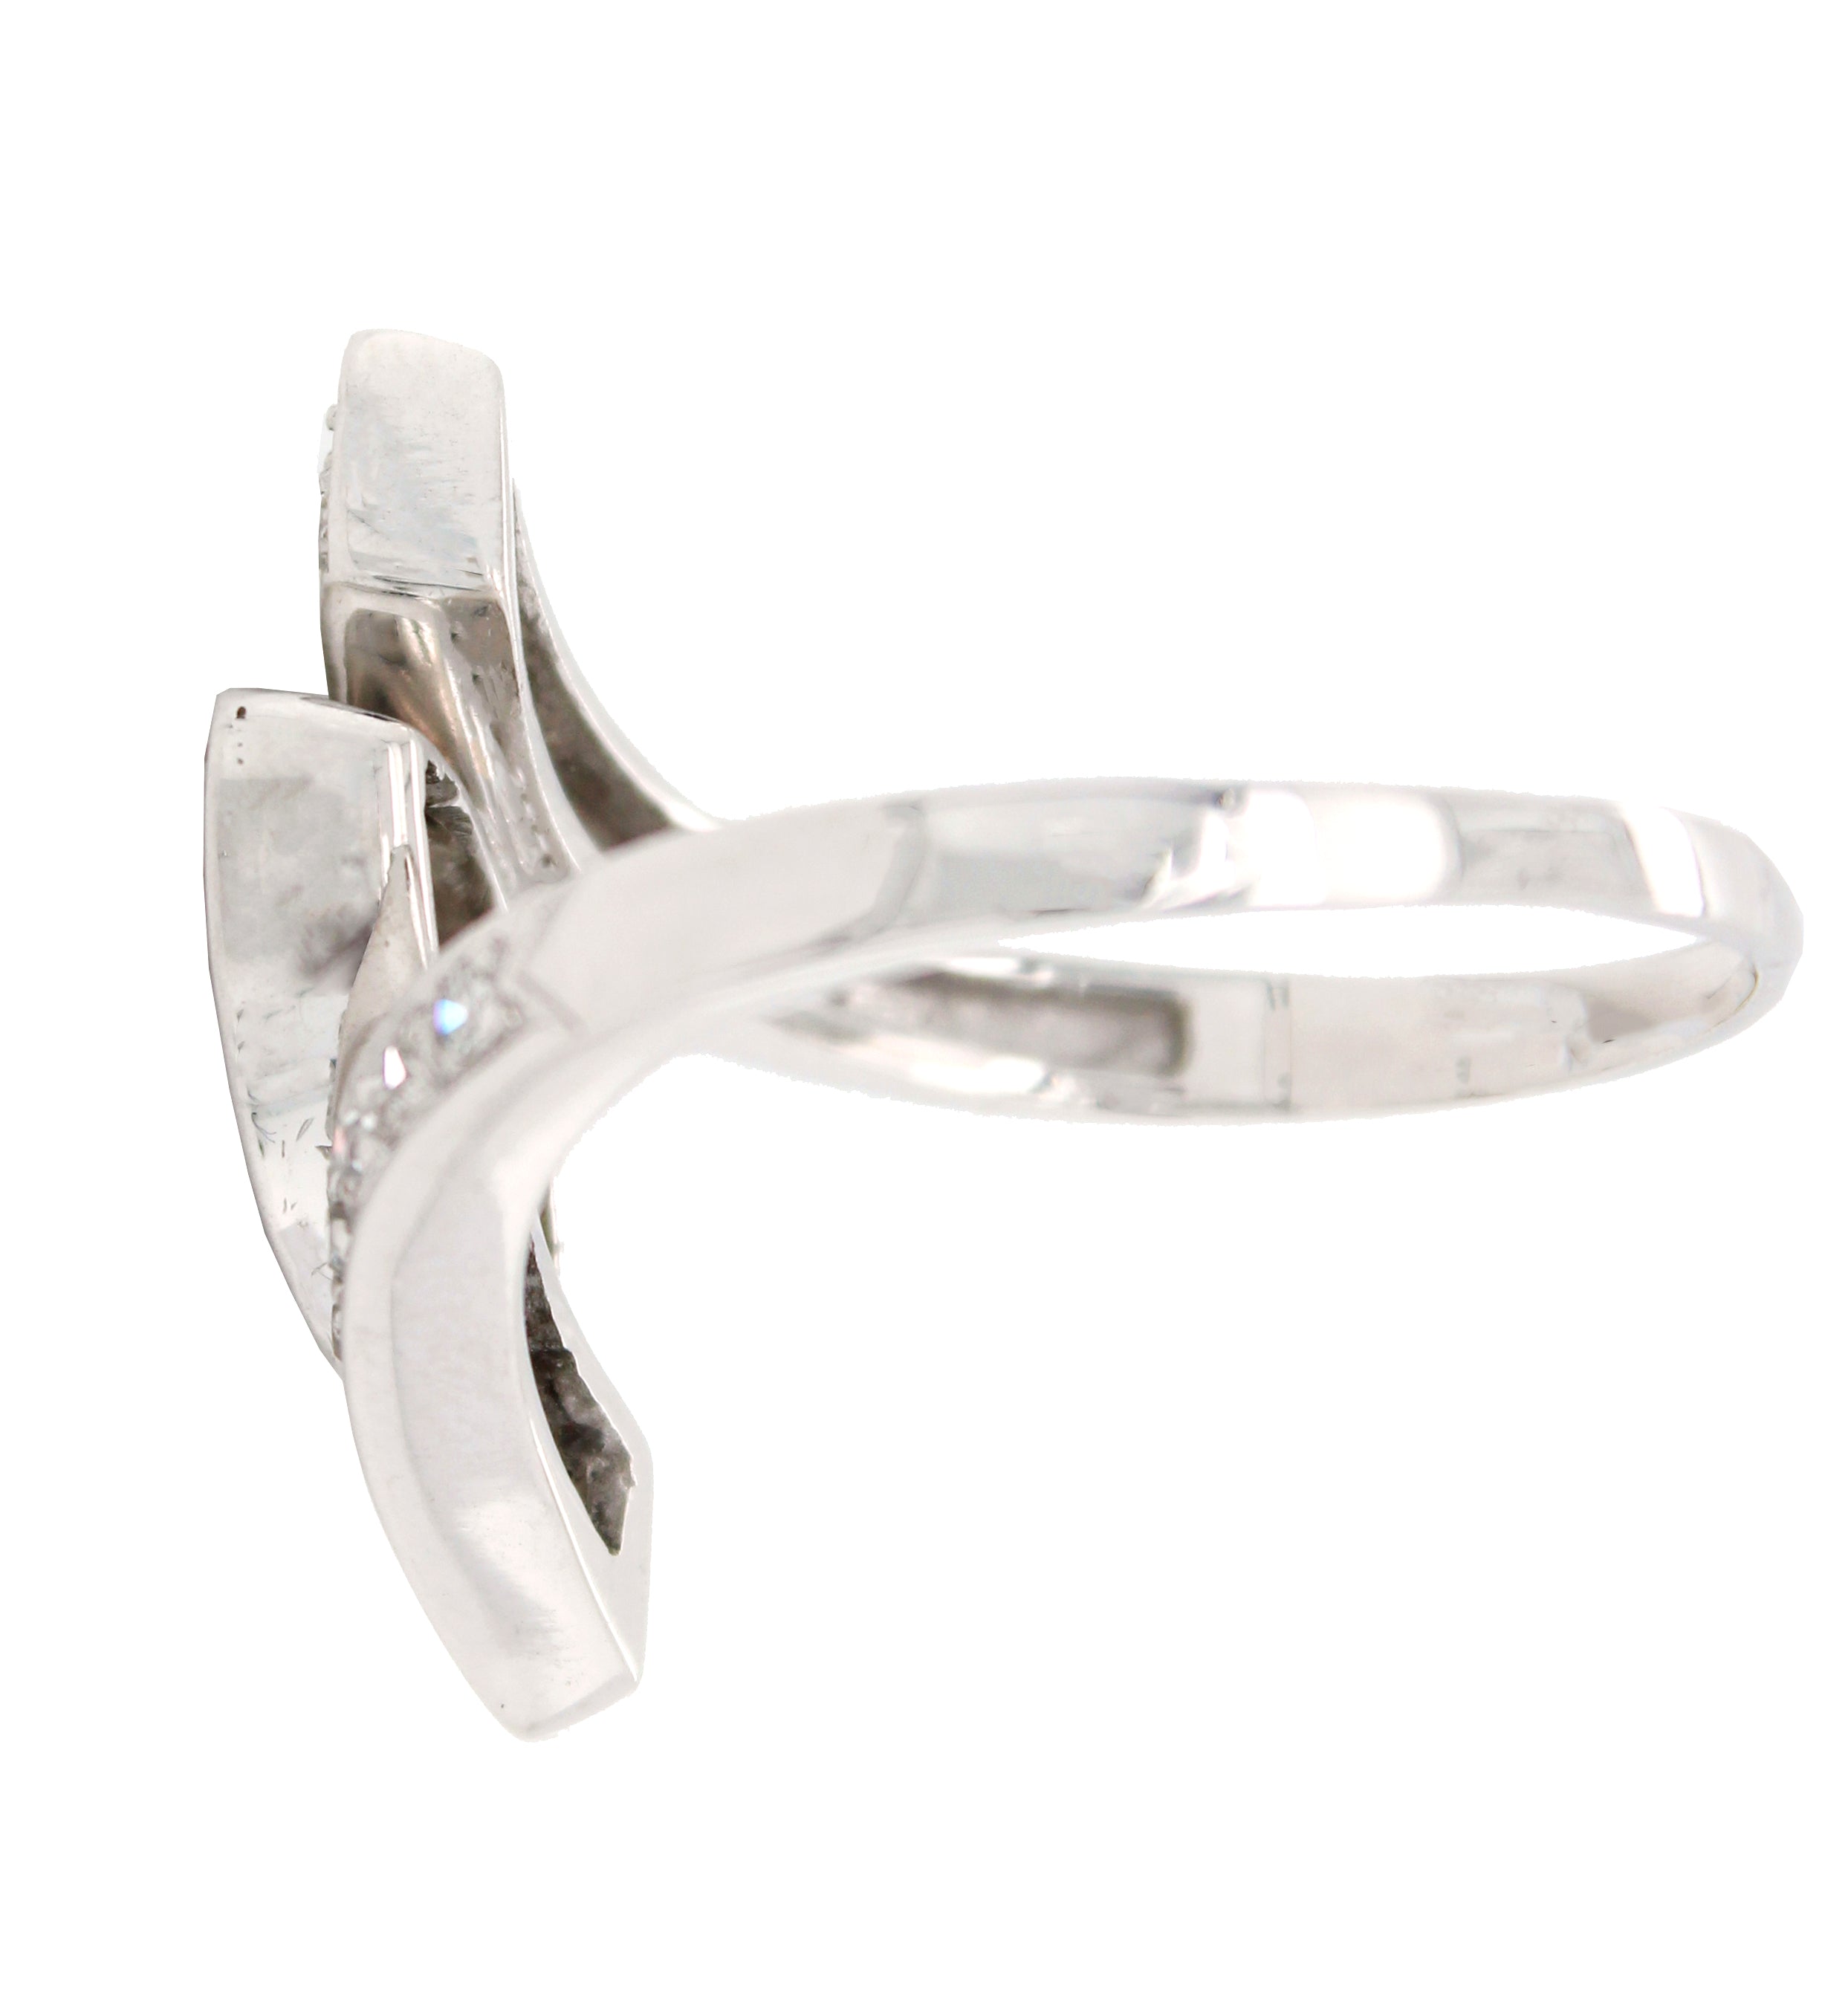 Vintage 1.25ctw Diamond Split Shank Band Ring in 14k White Gold | Size 9.25